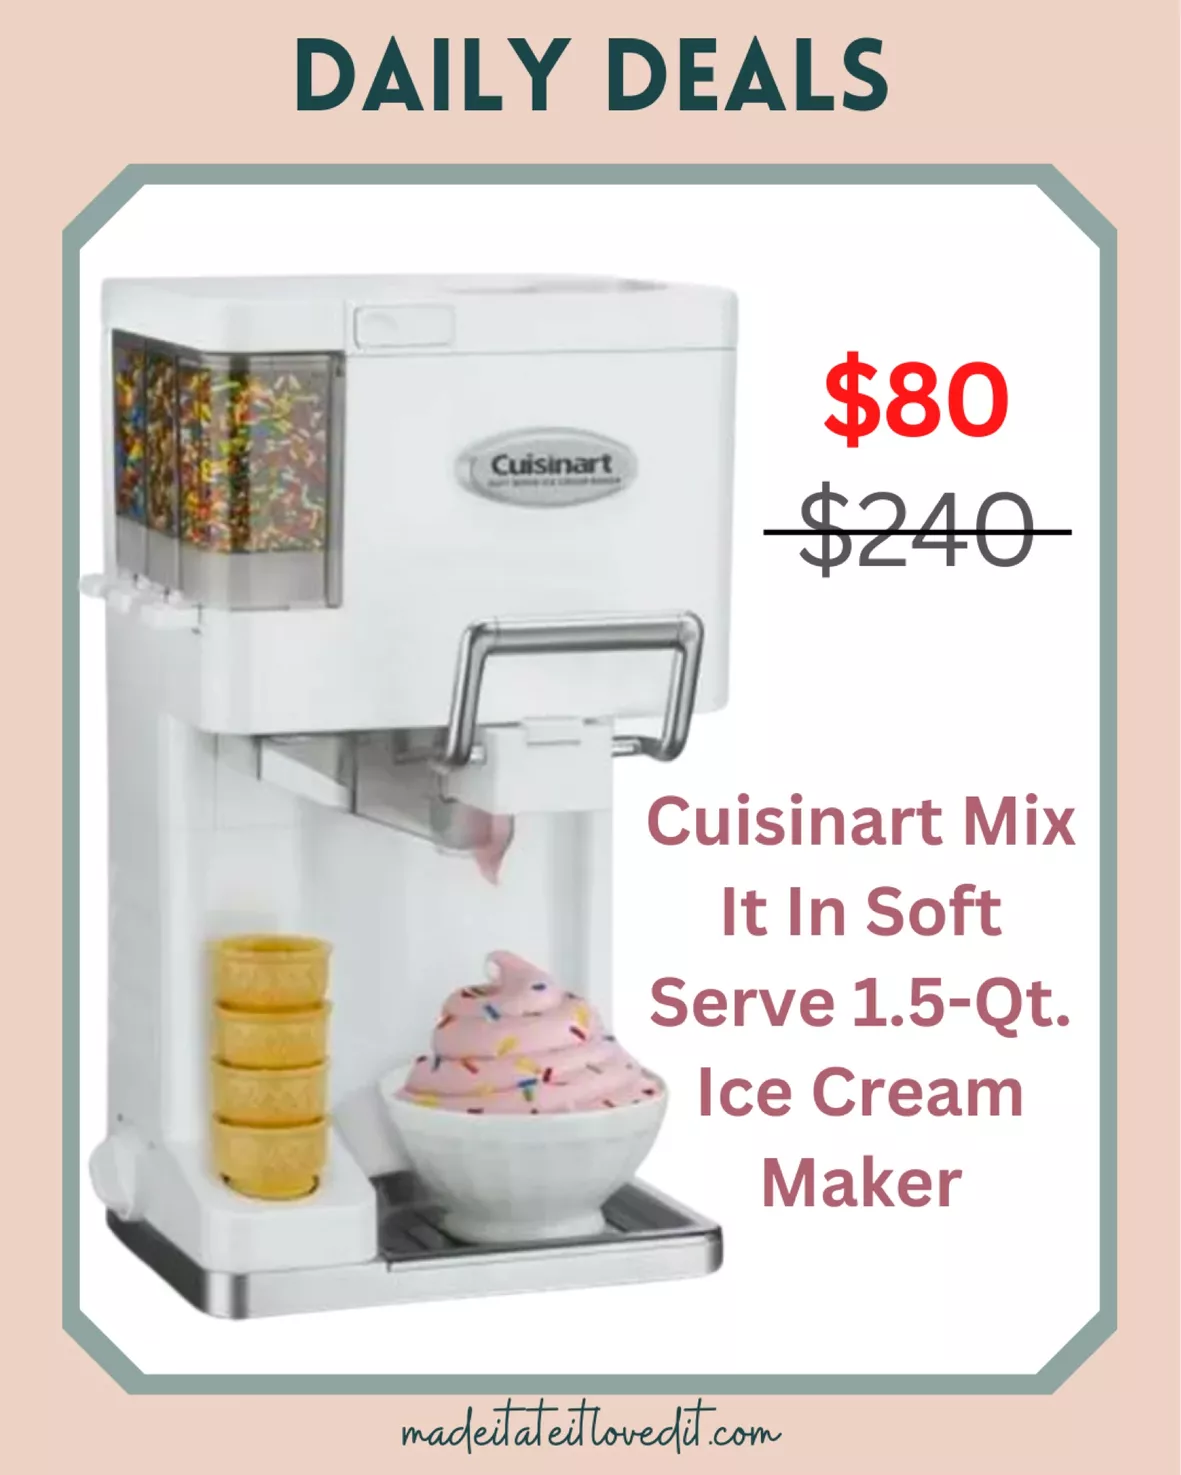 Cuisinart Mix It in Soft Serve Ice Cream Maker